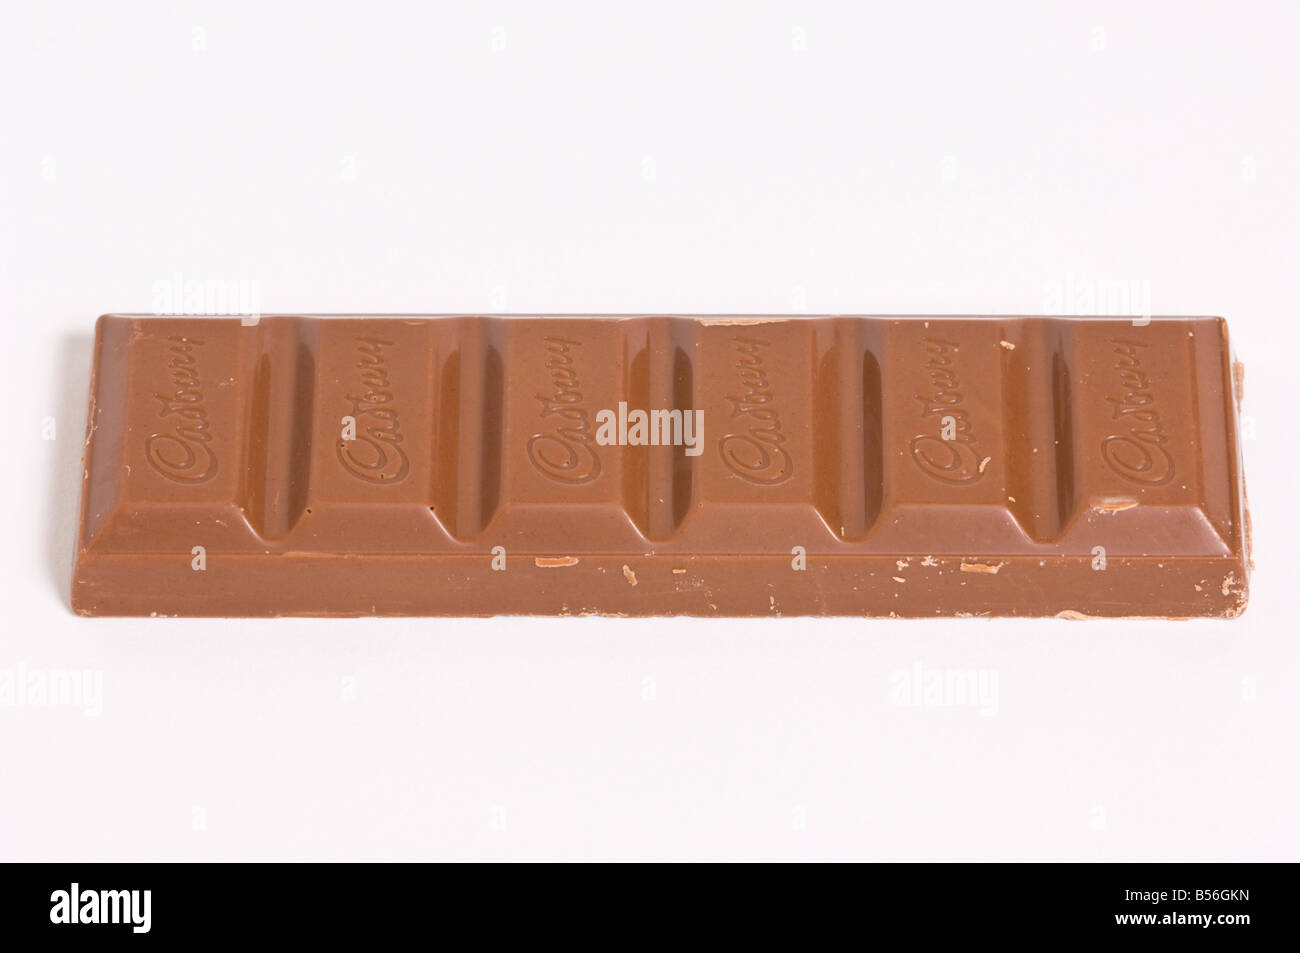 Cadburys Dairy Milk Chocolate bar (unwrapped) on white background Stock Photo